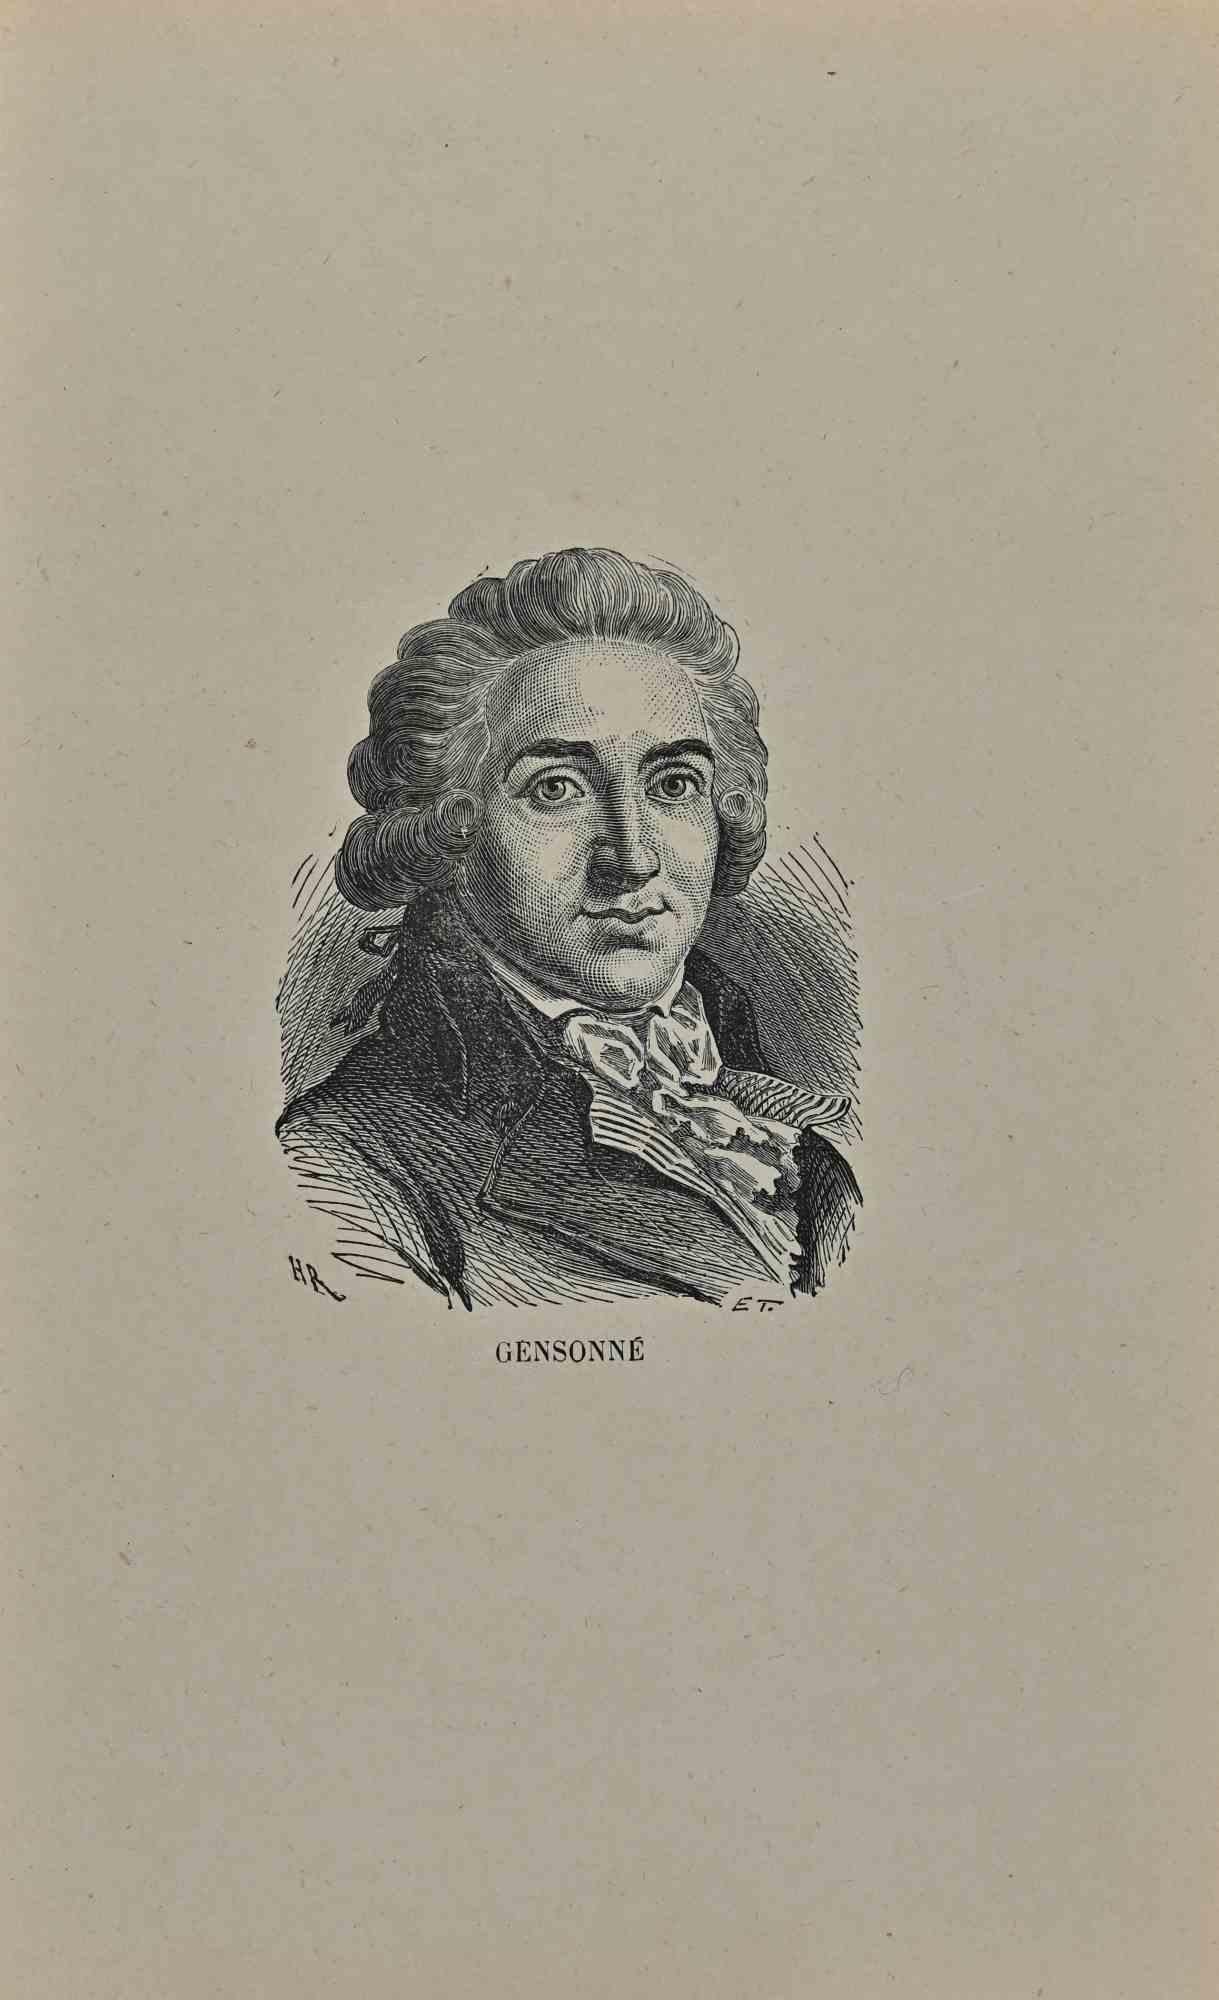 Unknown Portrait Print - Portrait of  Armand Gensonné - Lithograph - Early 19th century